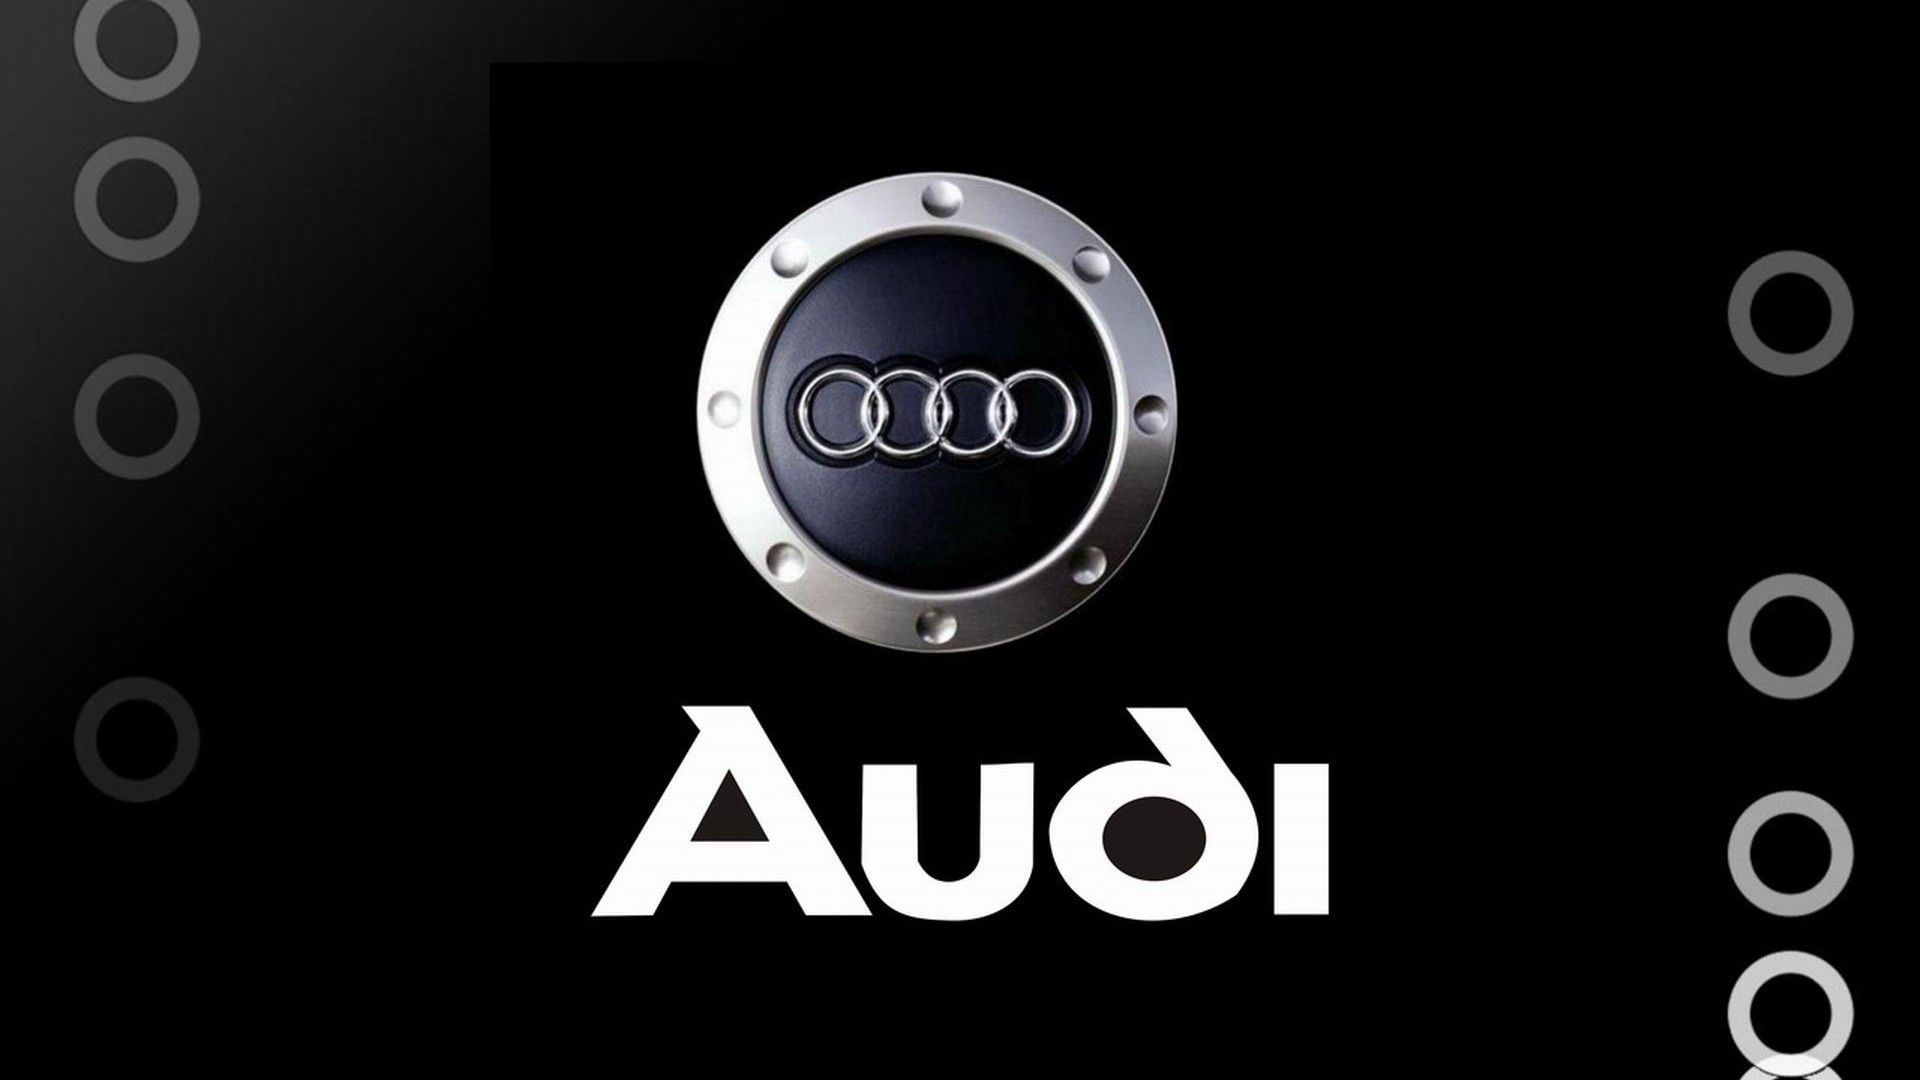 Audi Brand Logo with Black Background. Logo wallpaper hd, Branding design logo, Car brands logos